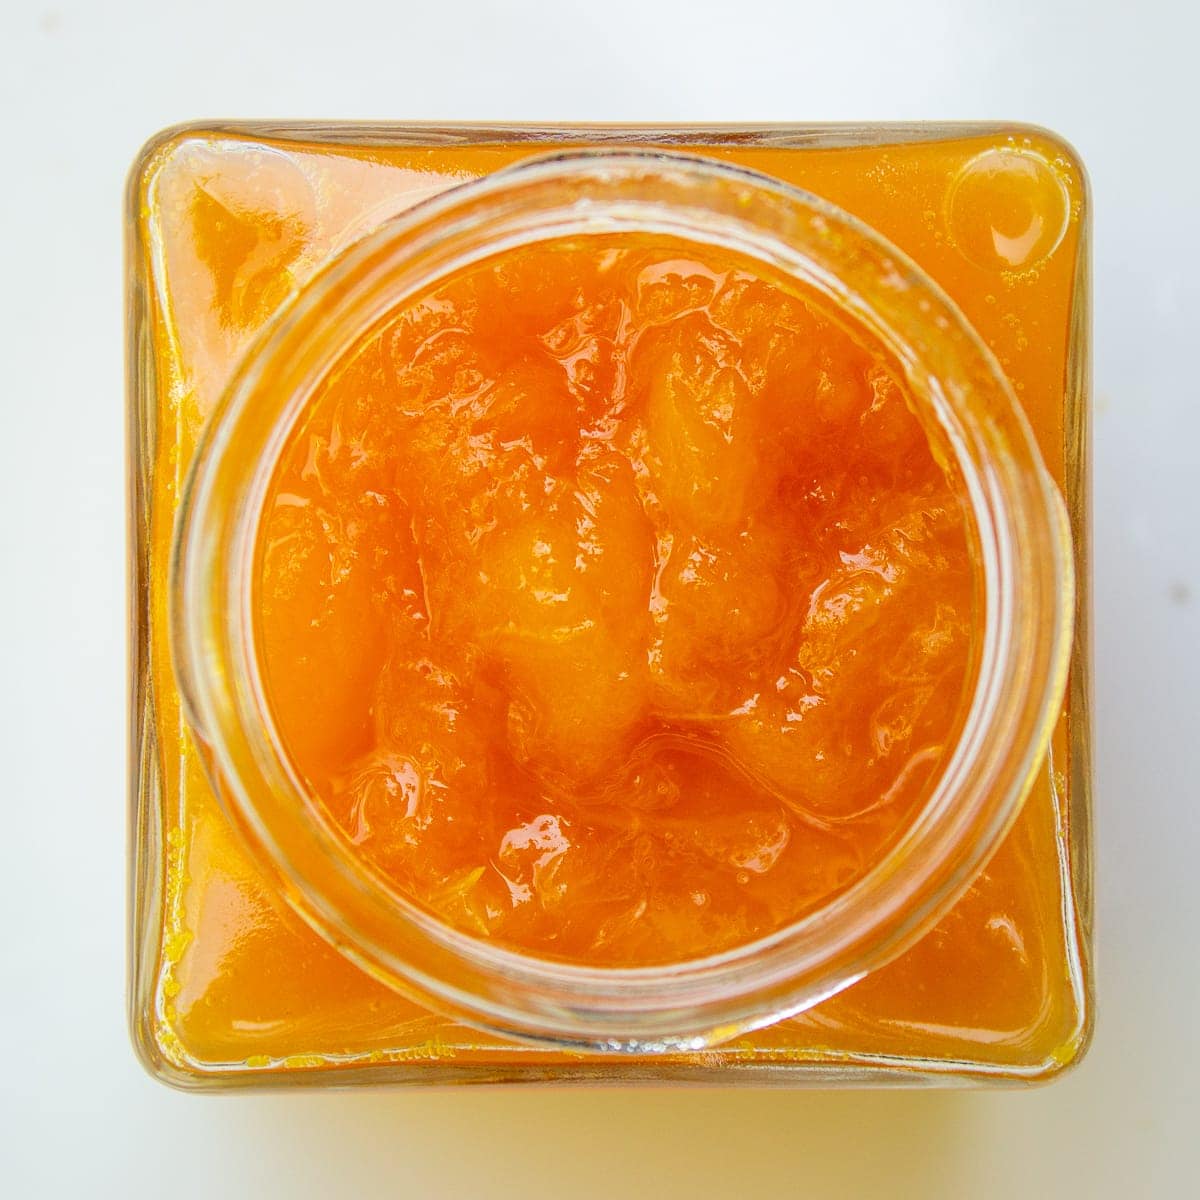 Peach Jam Recipe (without pectin)